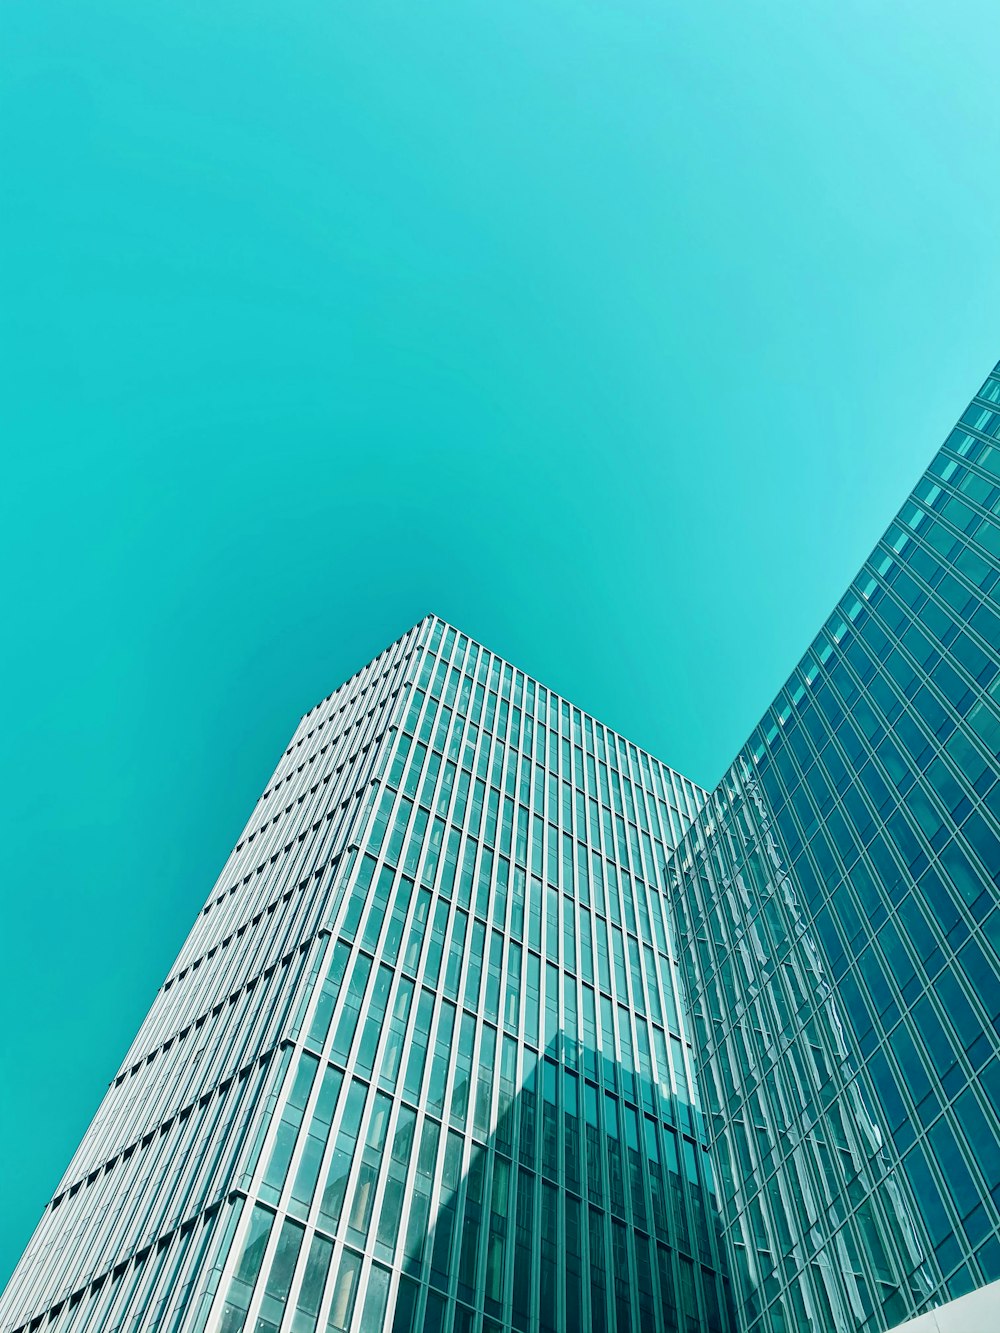 Edificio de gran altura con paredes de vidrio azul